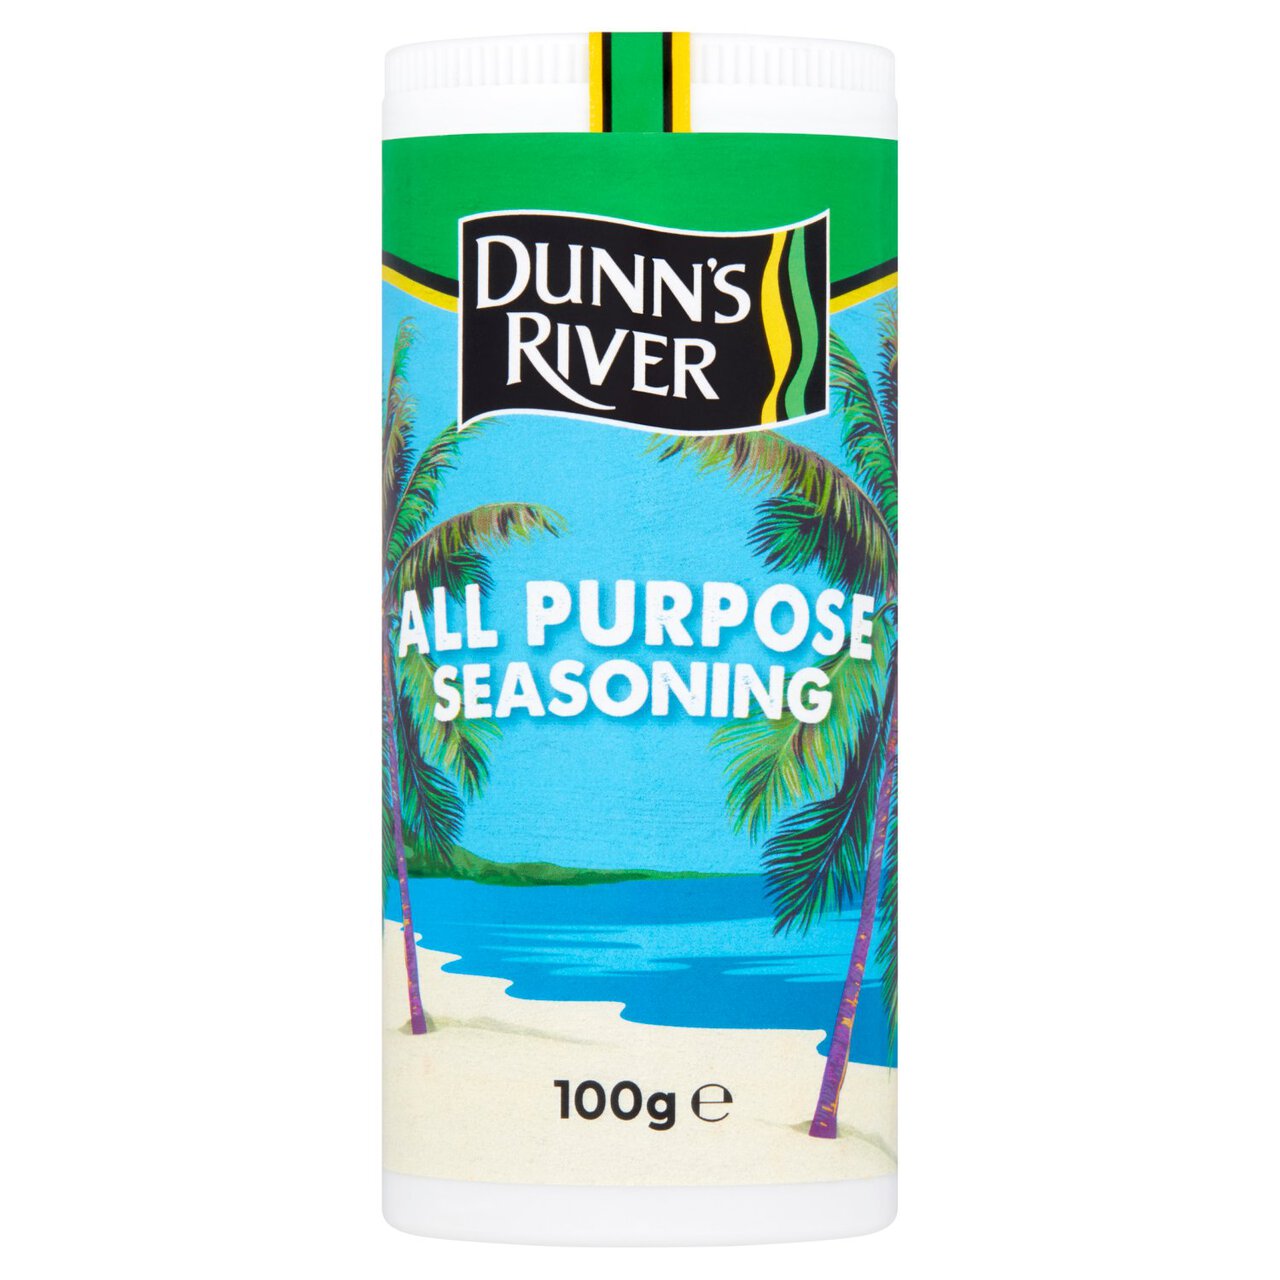 Dunns River All Purpose Seasoning 100g